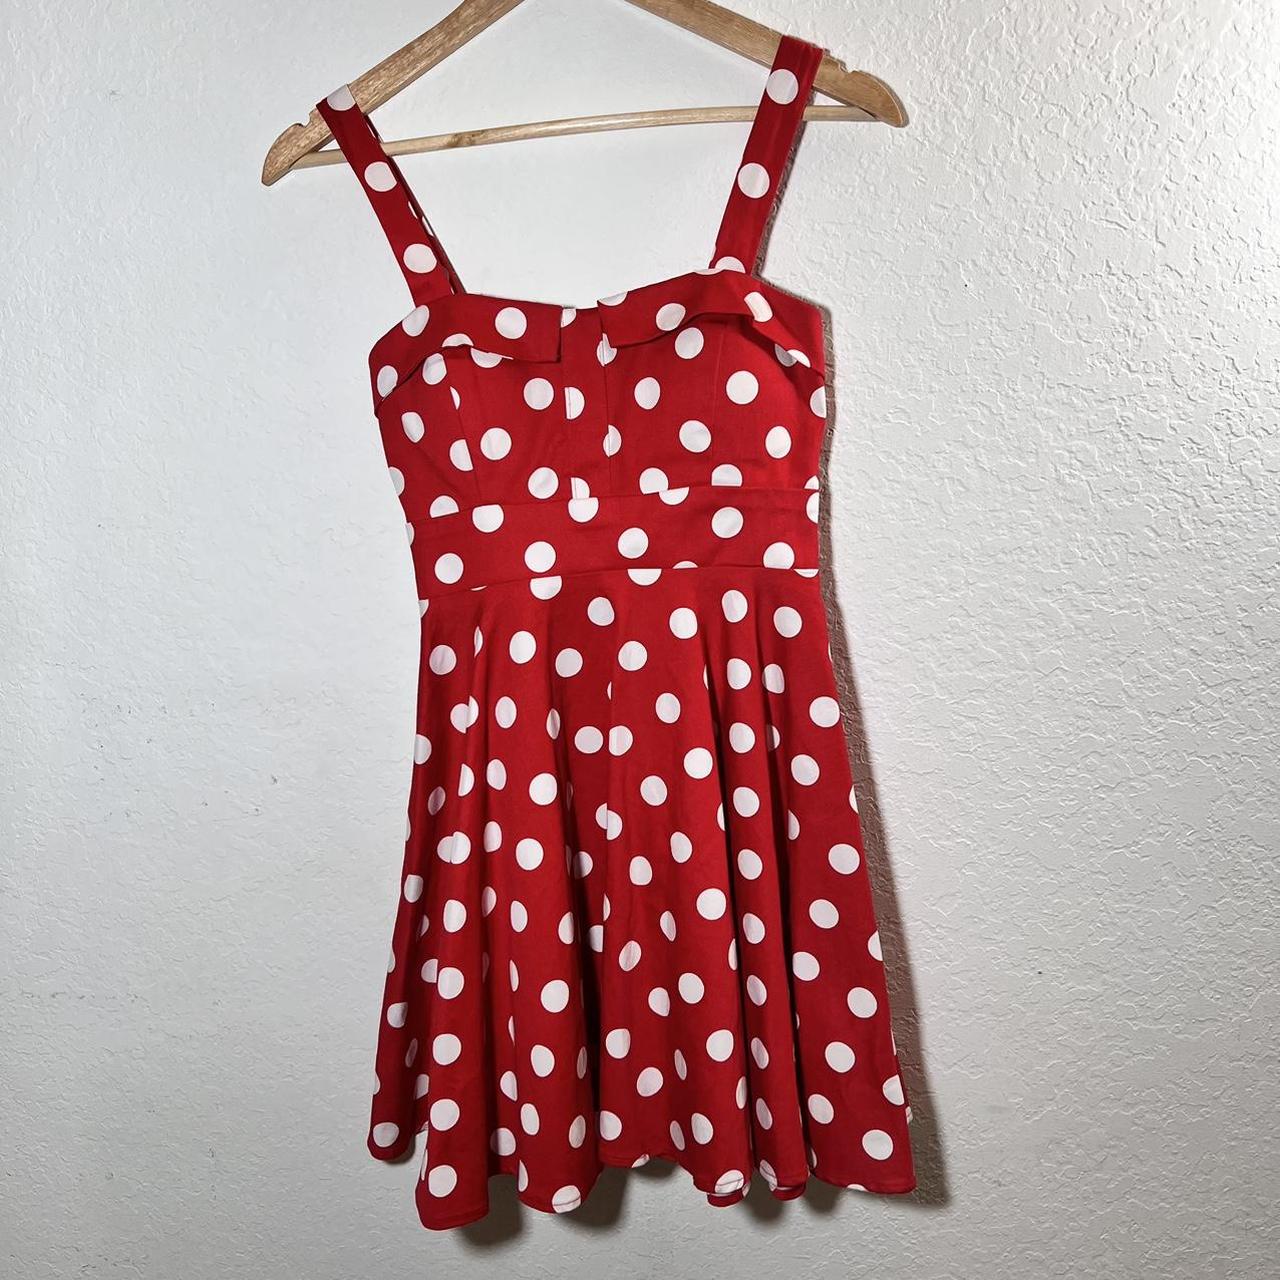 Retro red polka dot corset dress Sz small Lined on... - Depop